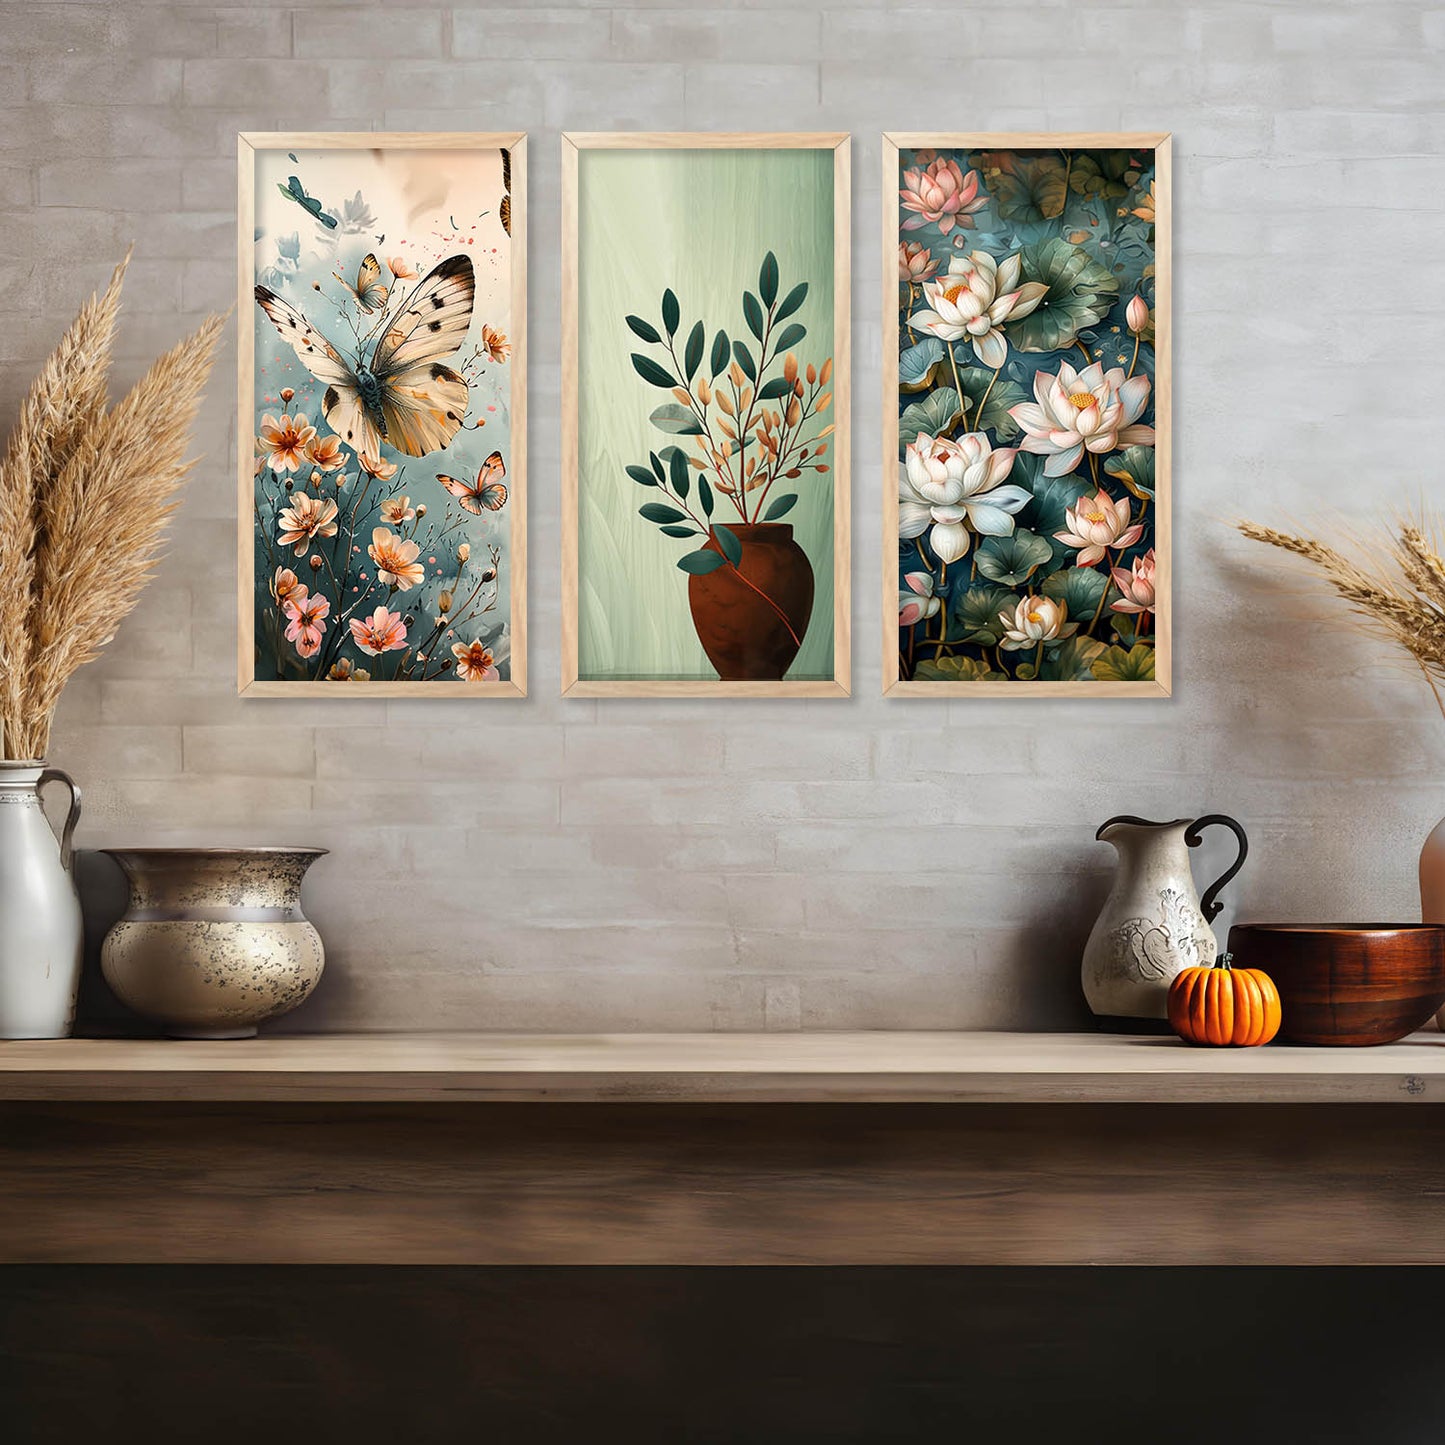 Floral Wall Art Home Decor Living Room , Decorative Wall Prints